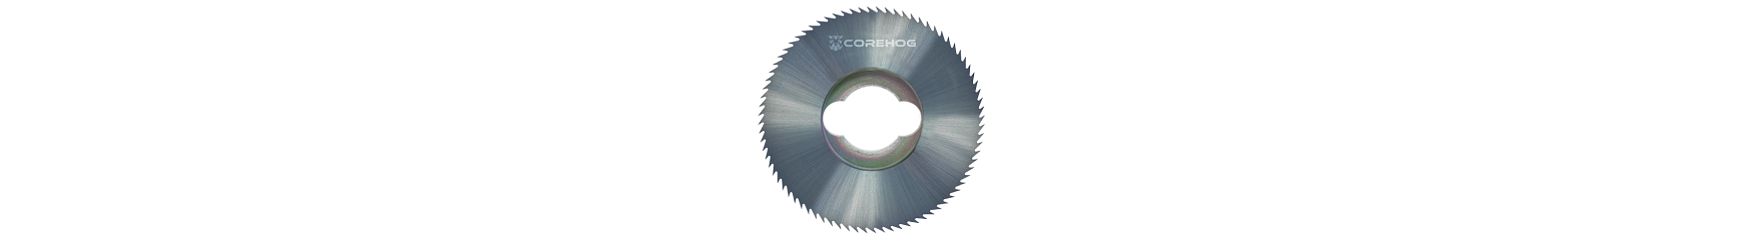 Finishing Core Tools-Large Coreslicers